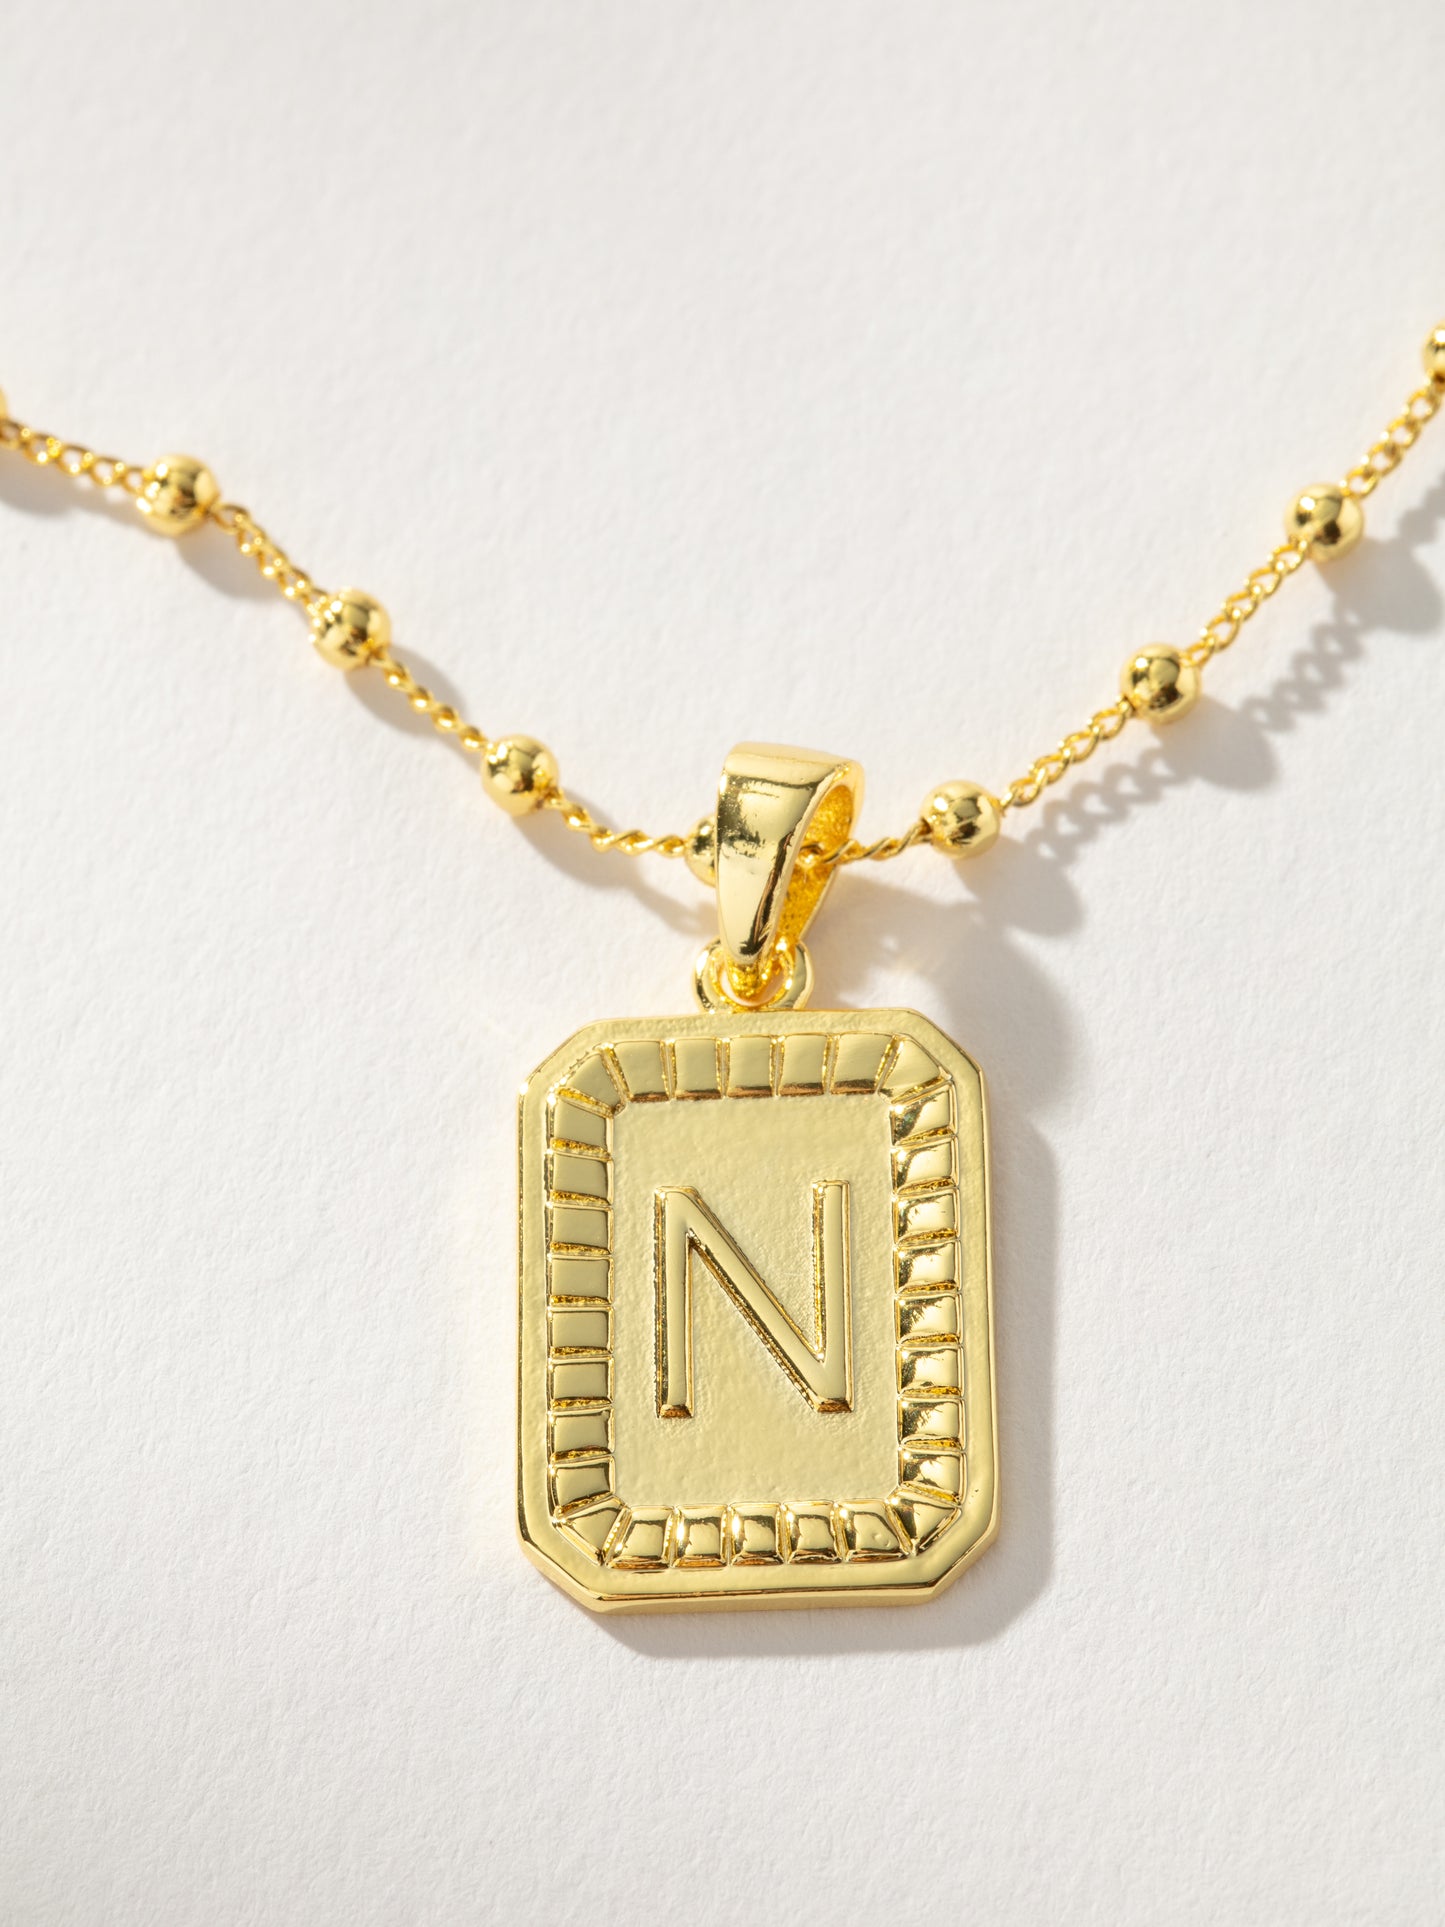 Sur Necklace | Gold N | Product Image | Uncommon James